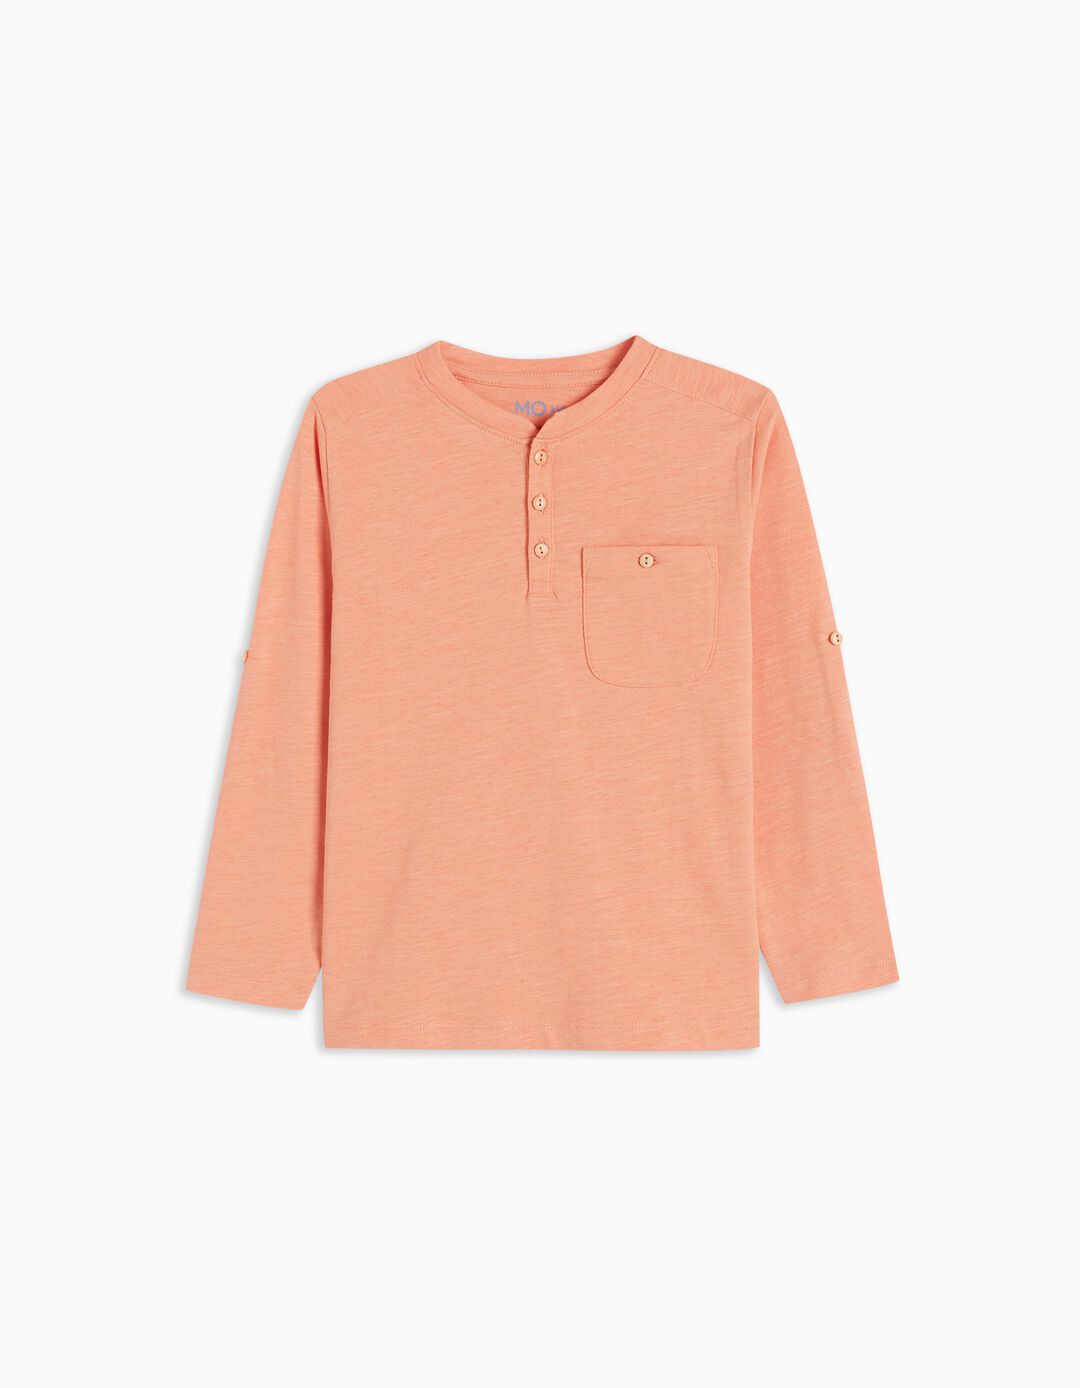 Long Sleeve T-shirt, Boys, Light Orange